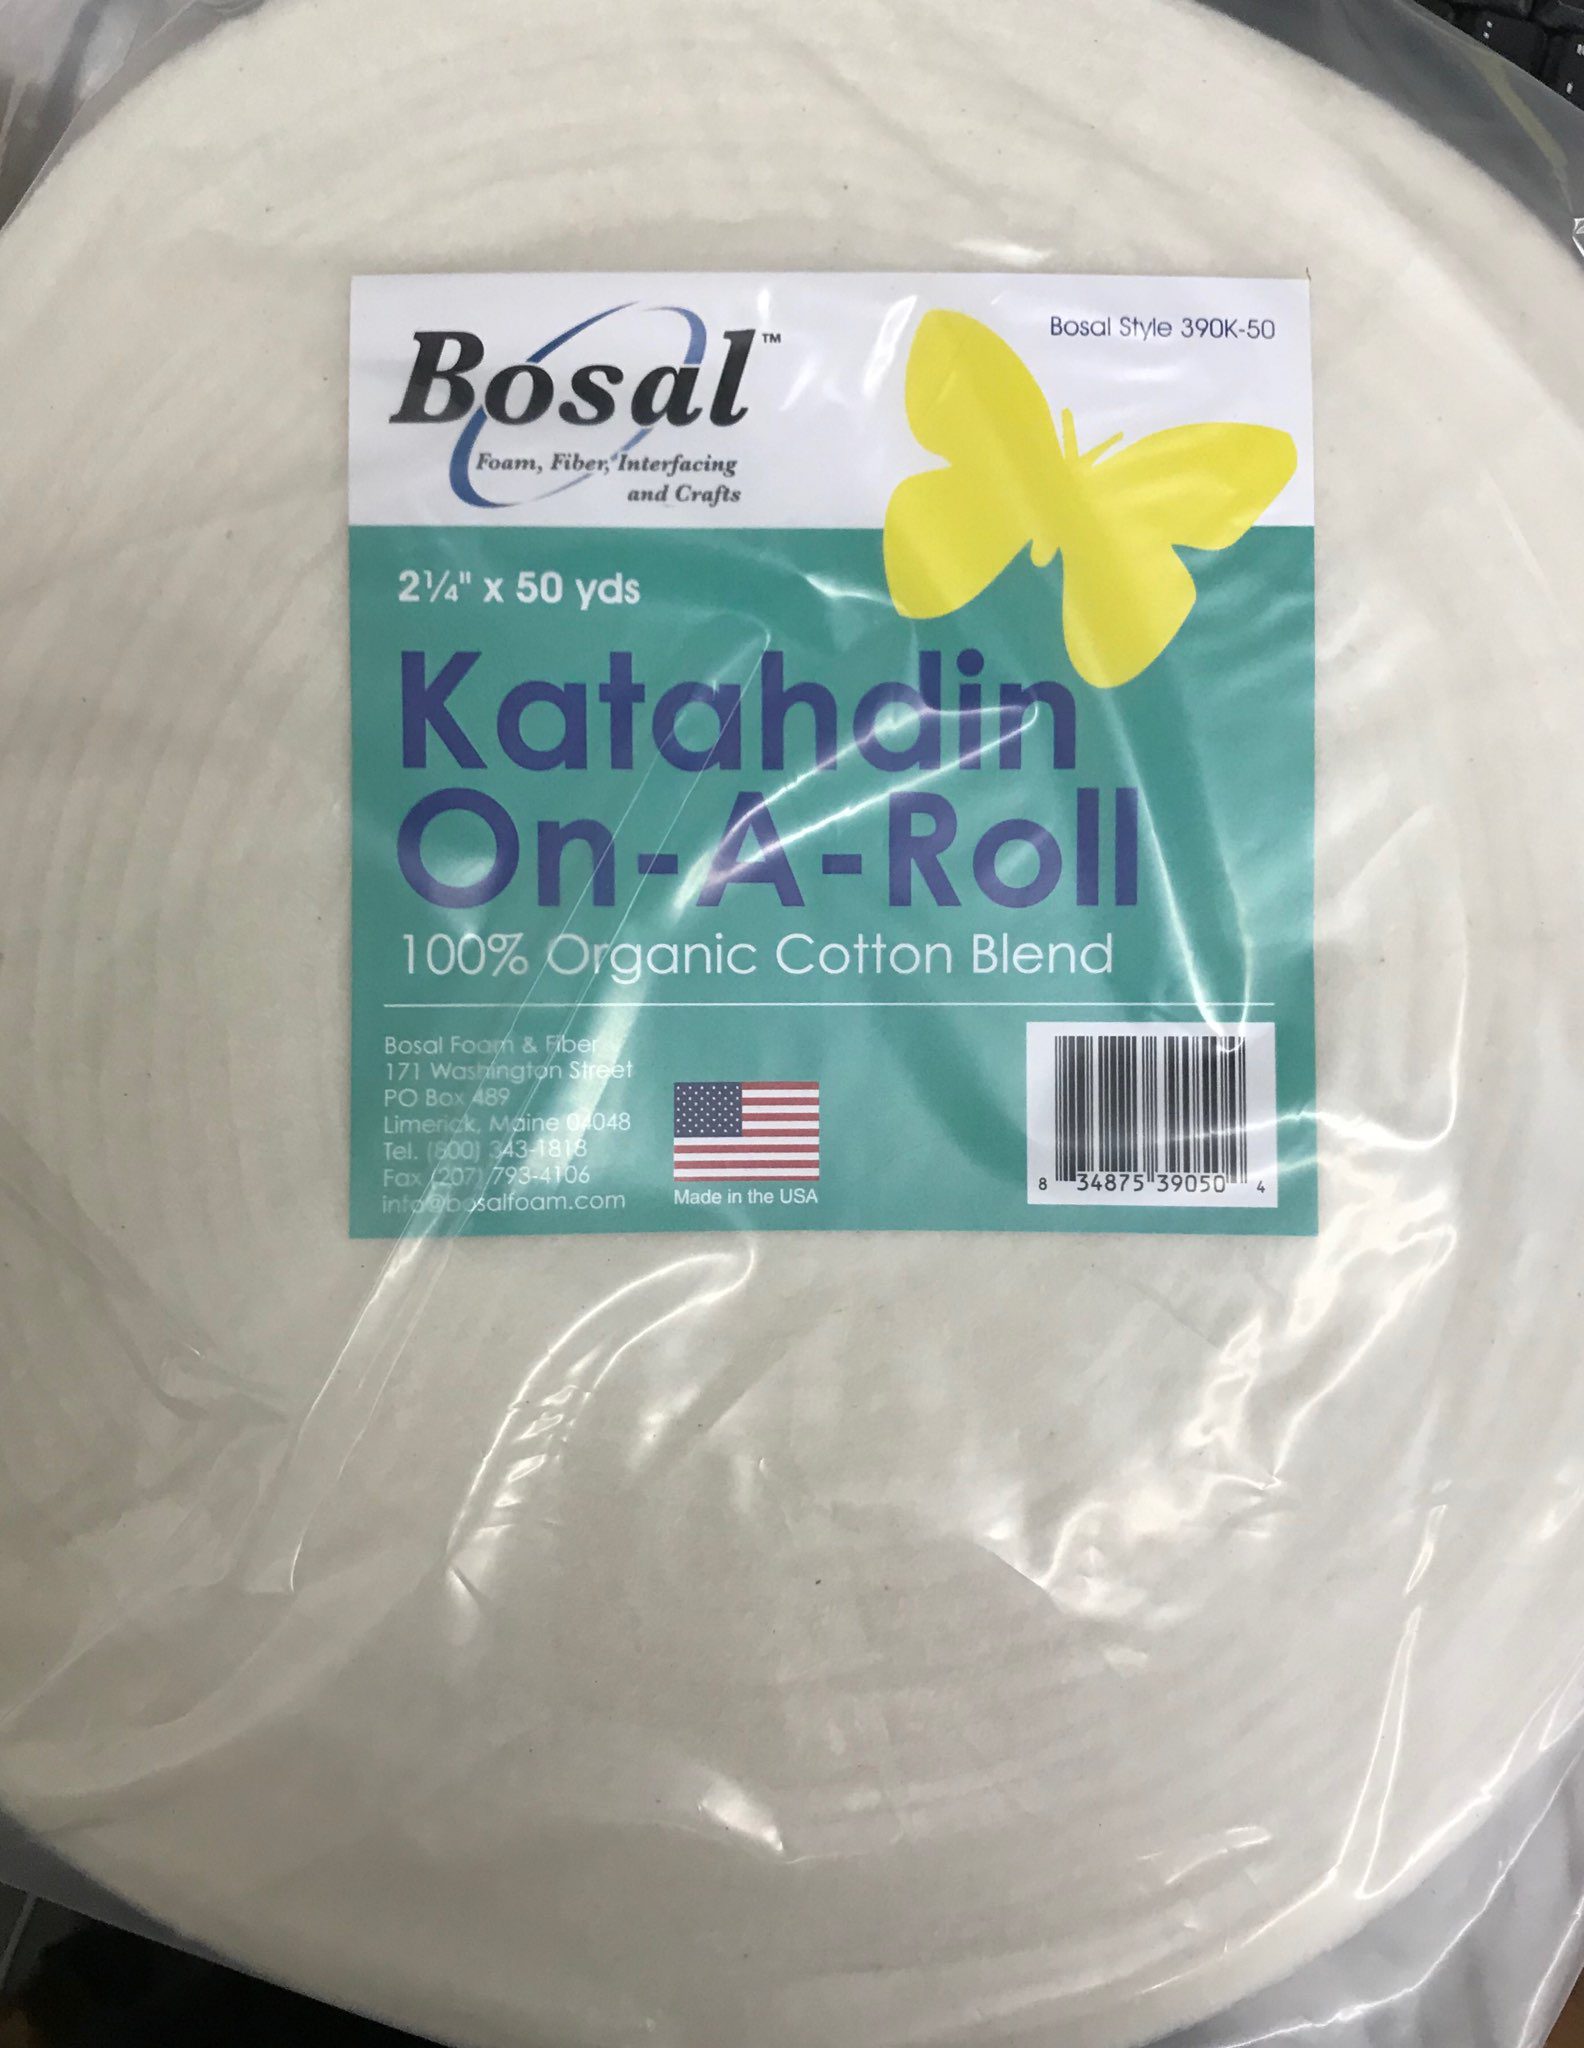 Bosal - Katahdin - On-A-Roll - 2 1/4" x 50yds